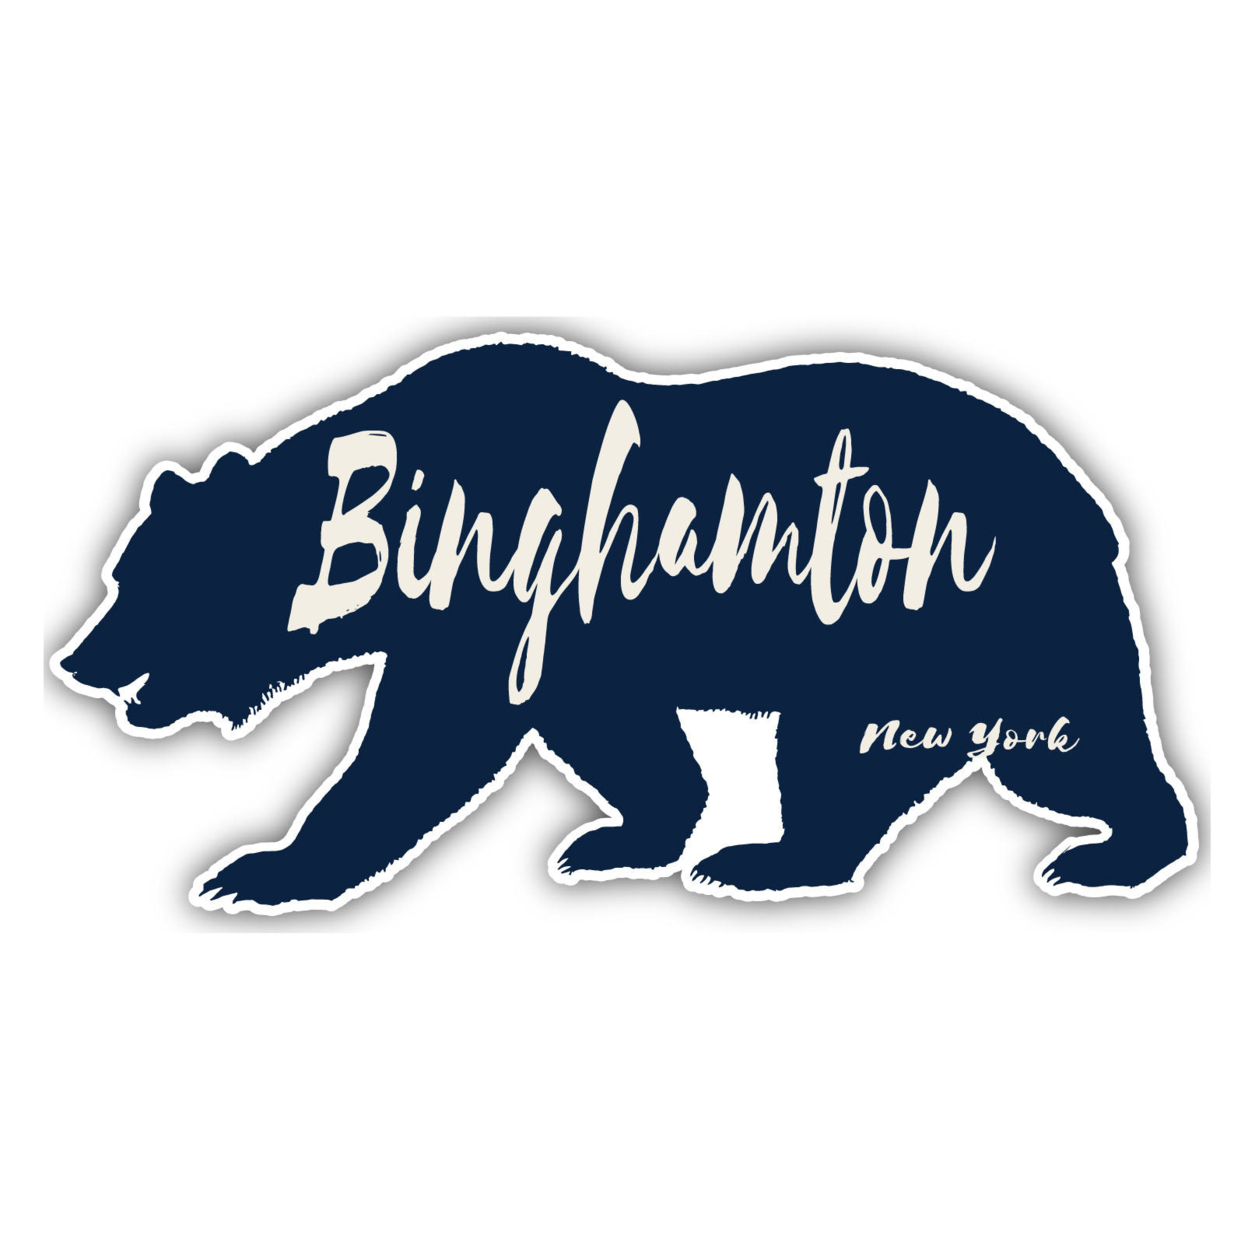 Binghamton New York Souvenir Decorative Stickers (Choose Theme And Size) - 4-Pack, 4-Inch, Bear